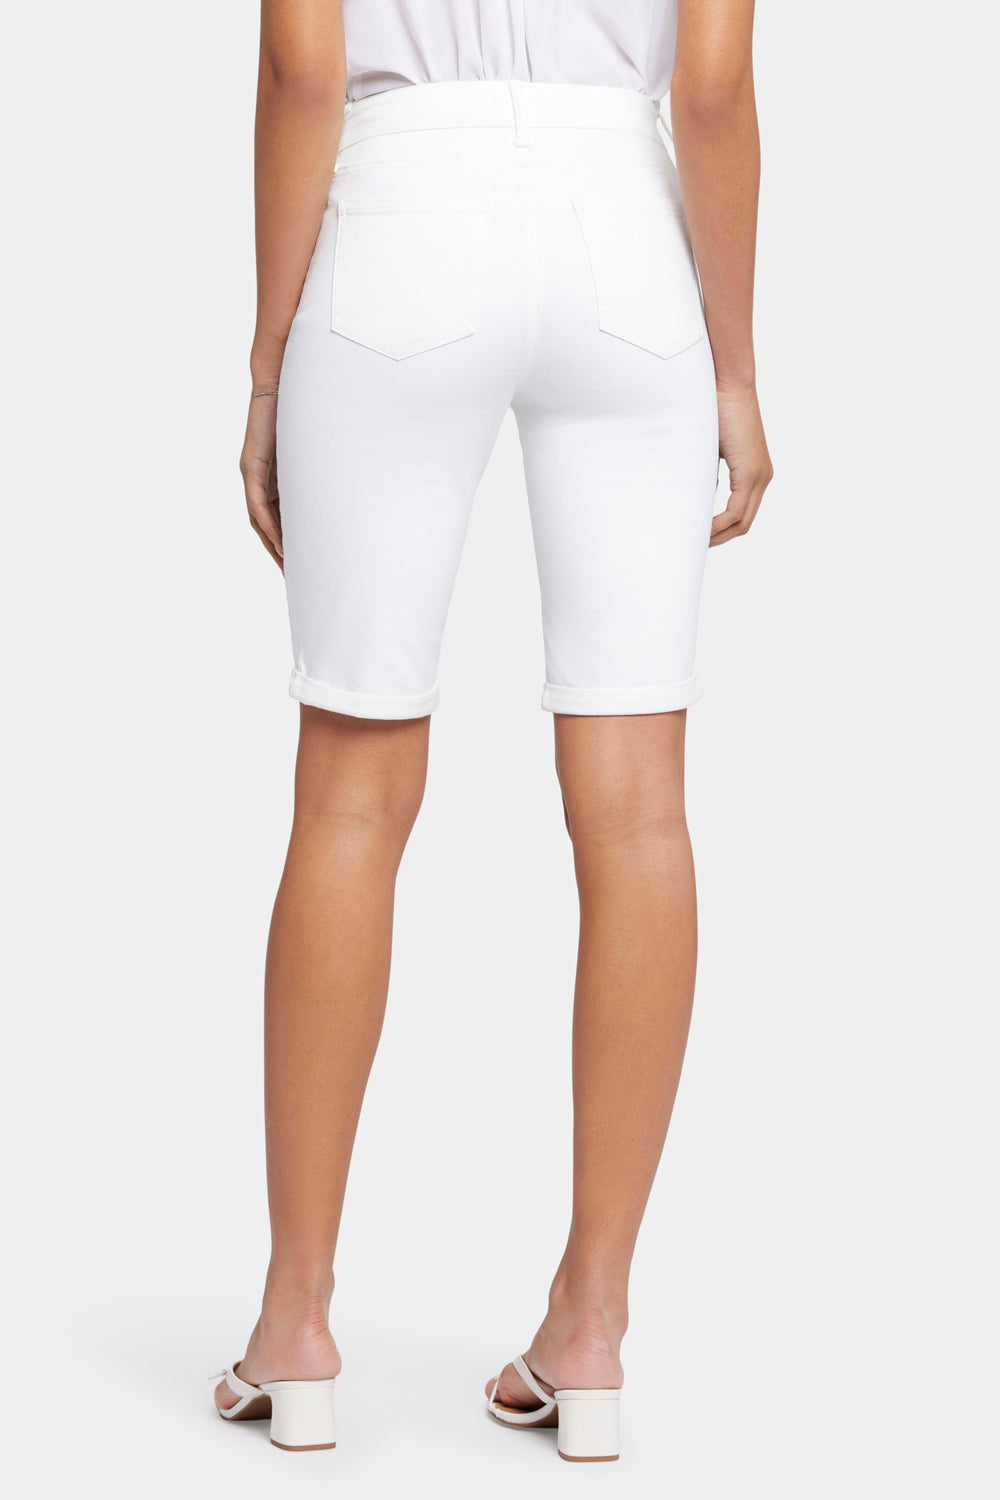 NYDJ Briella 11 Inch Denim Shorts With Roll Cuffs - Optic White